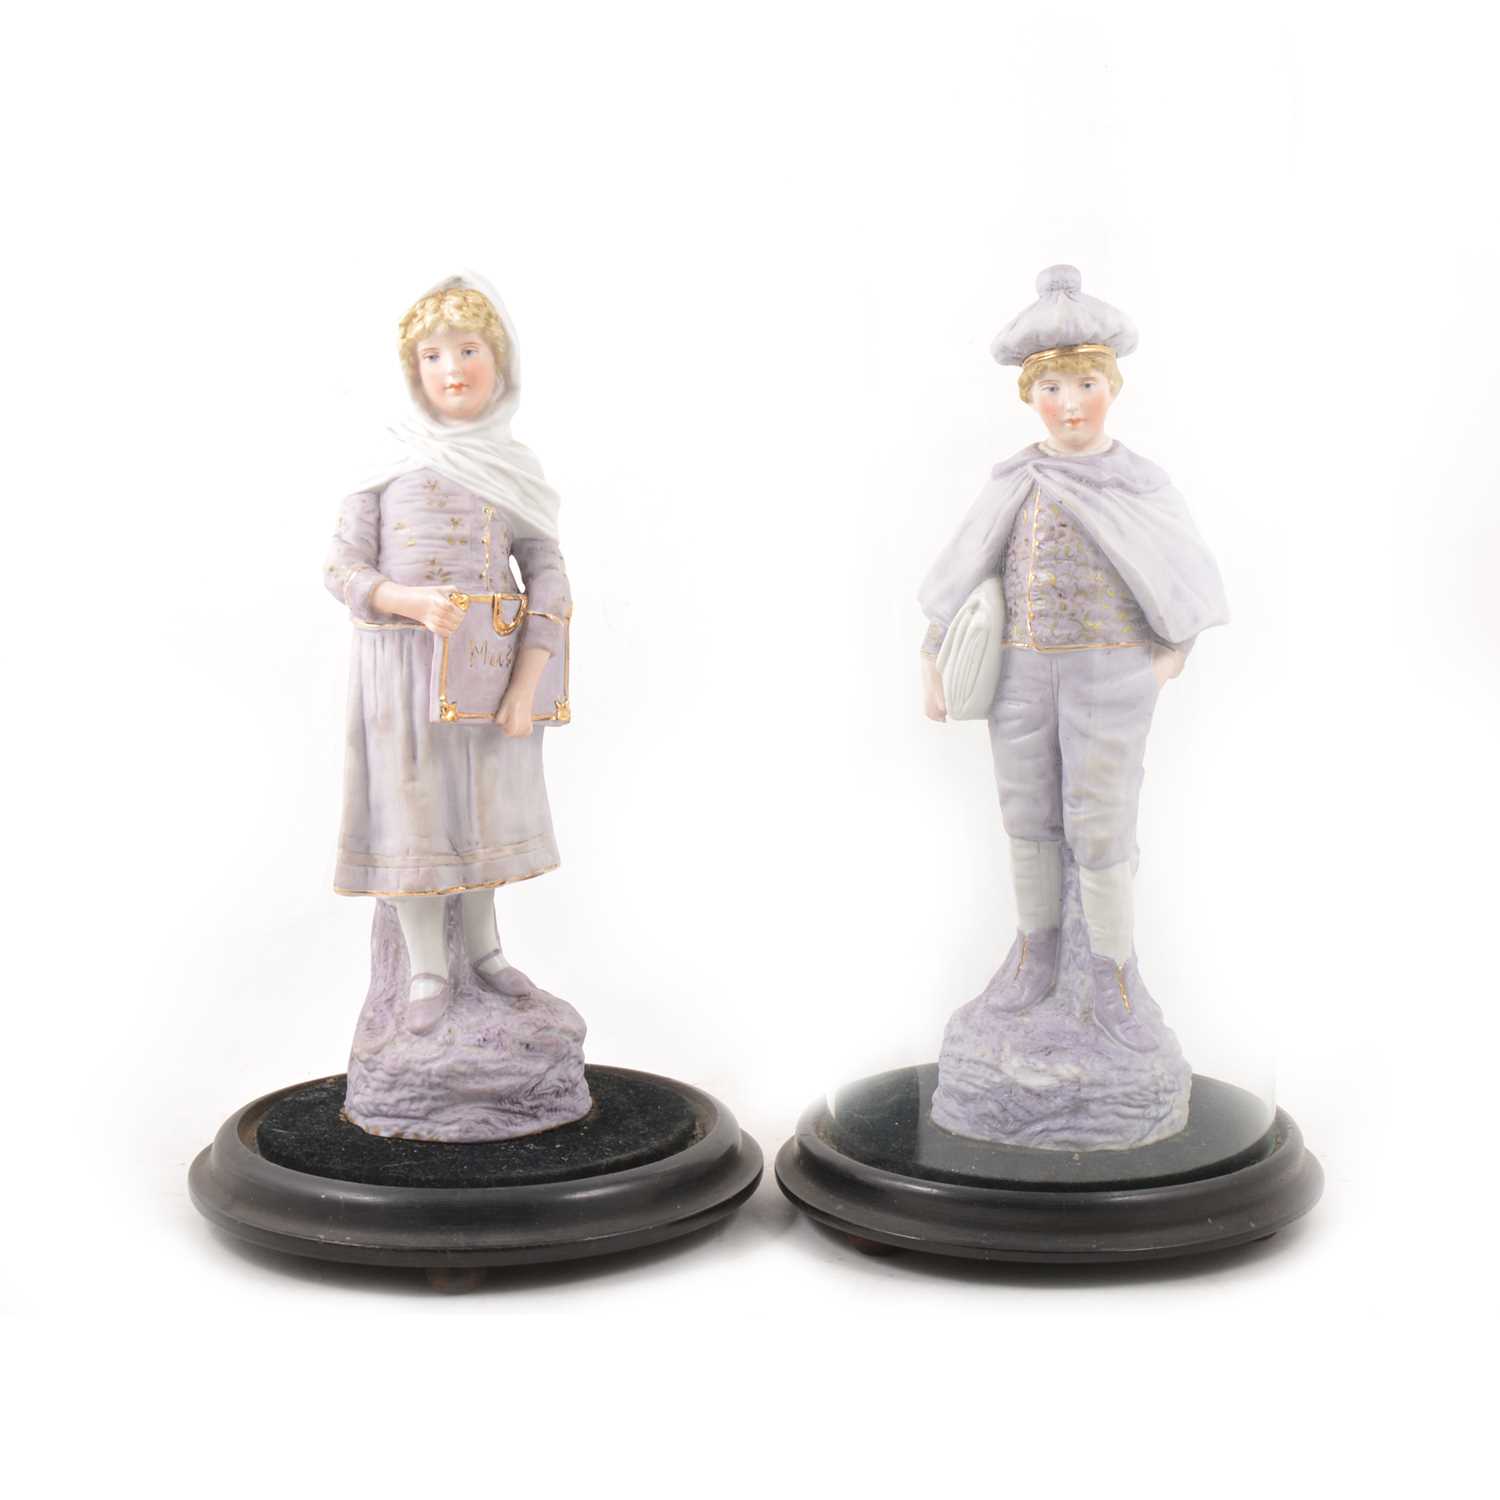 Lot 44 - Pair of Continental bisque porcelain figures.